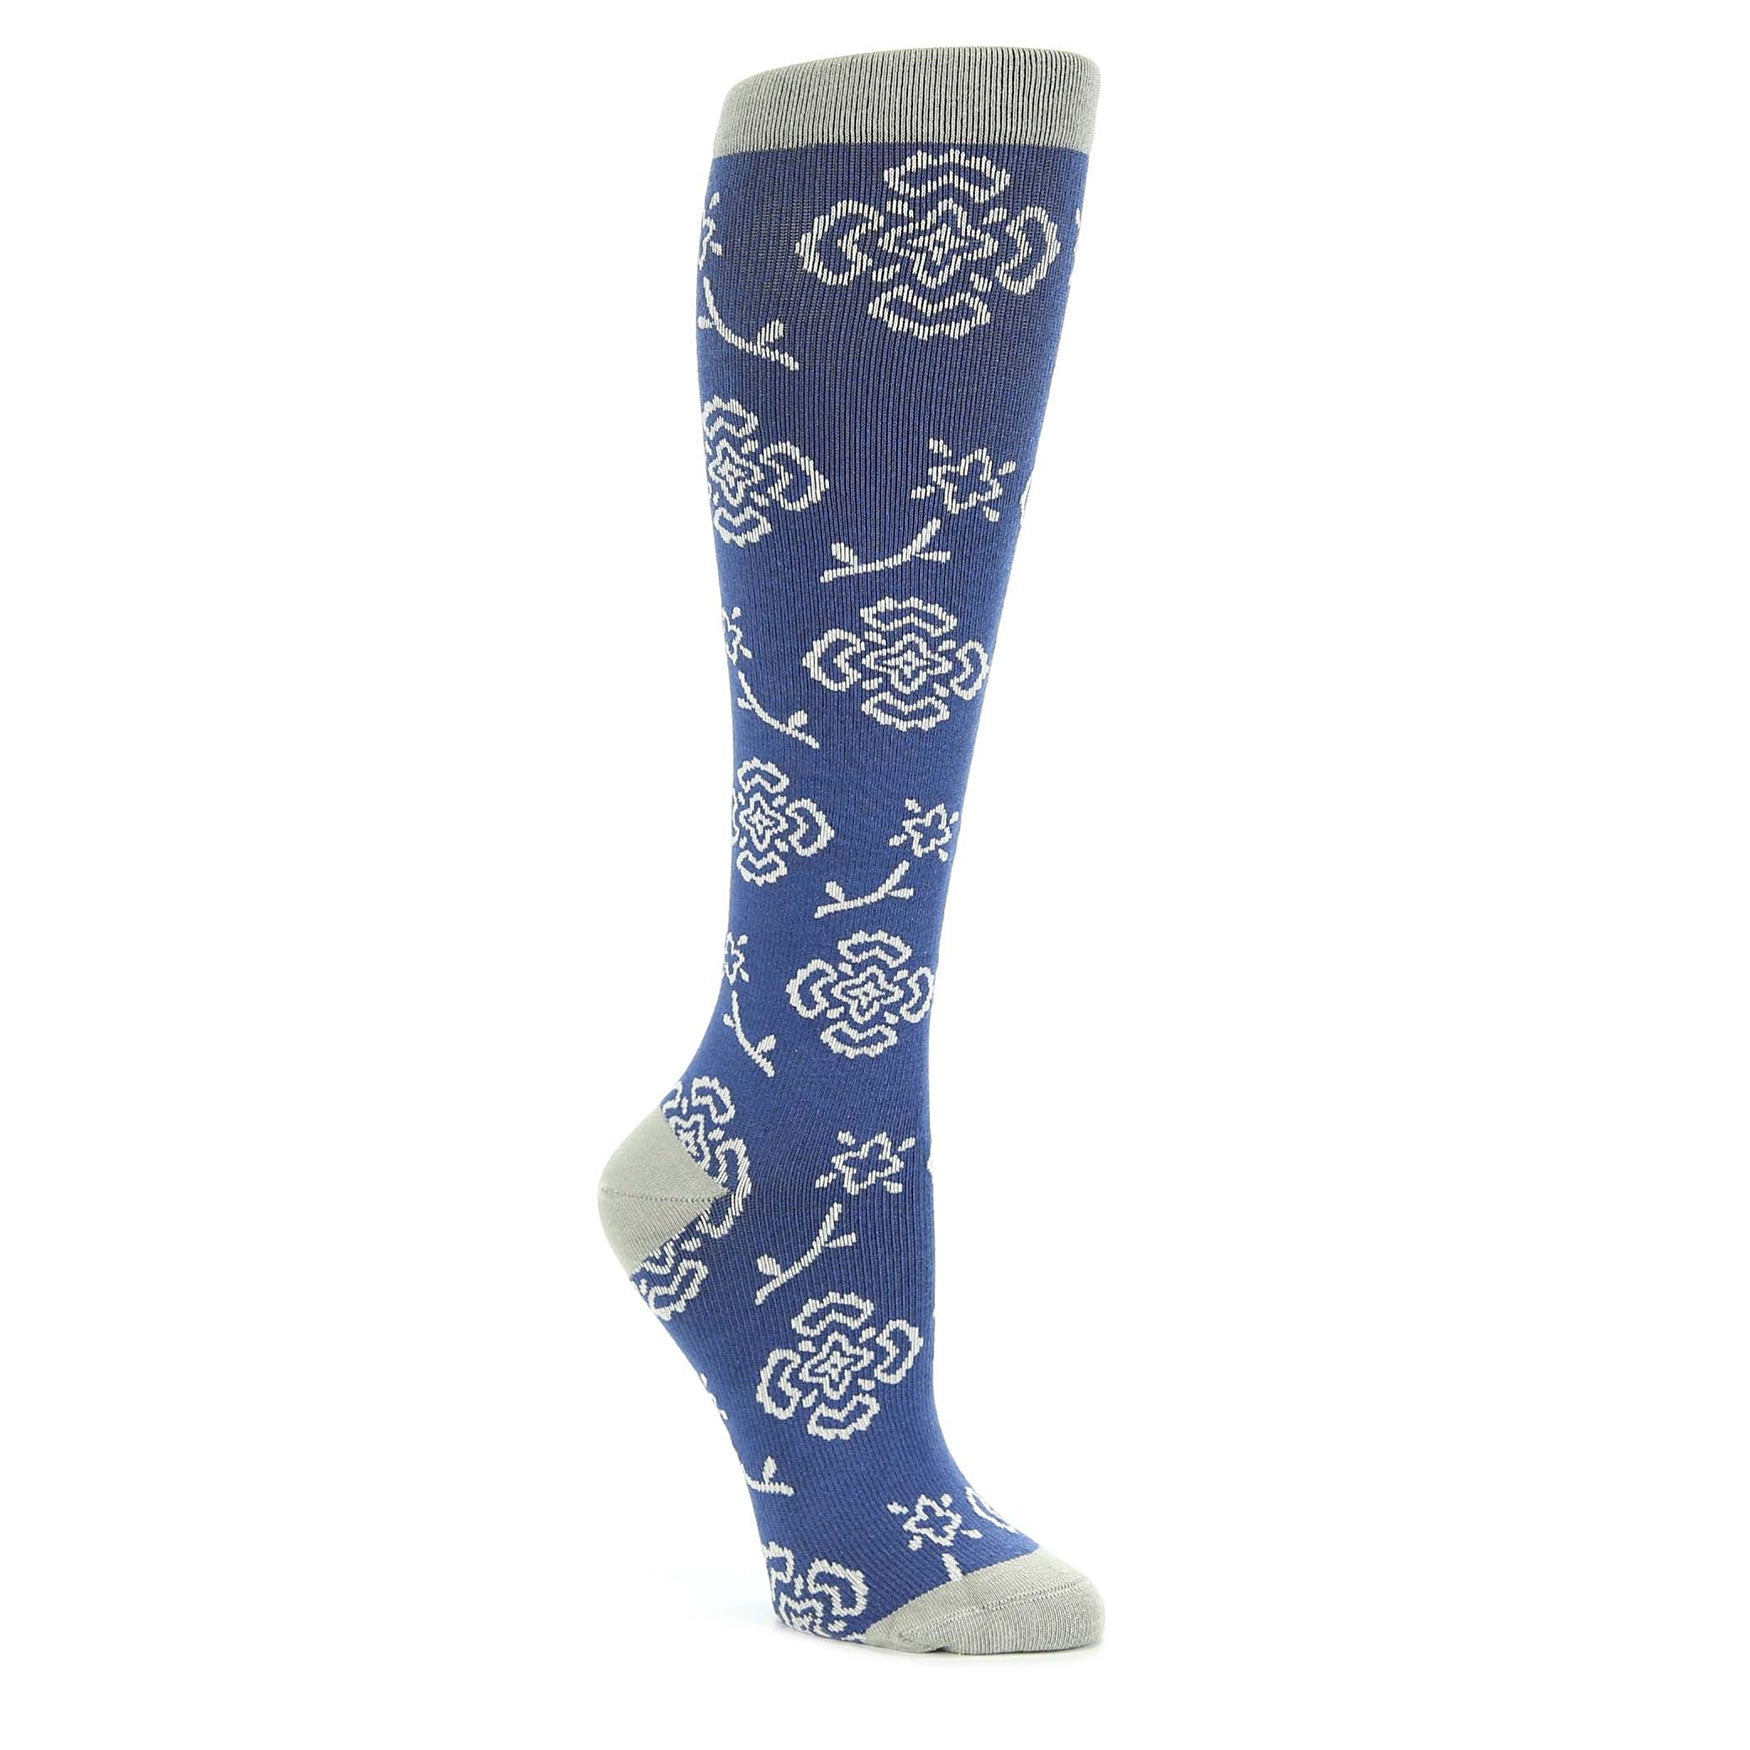 Blue Gray Floral Compression Socks - Women's Knee High Socks